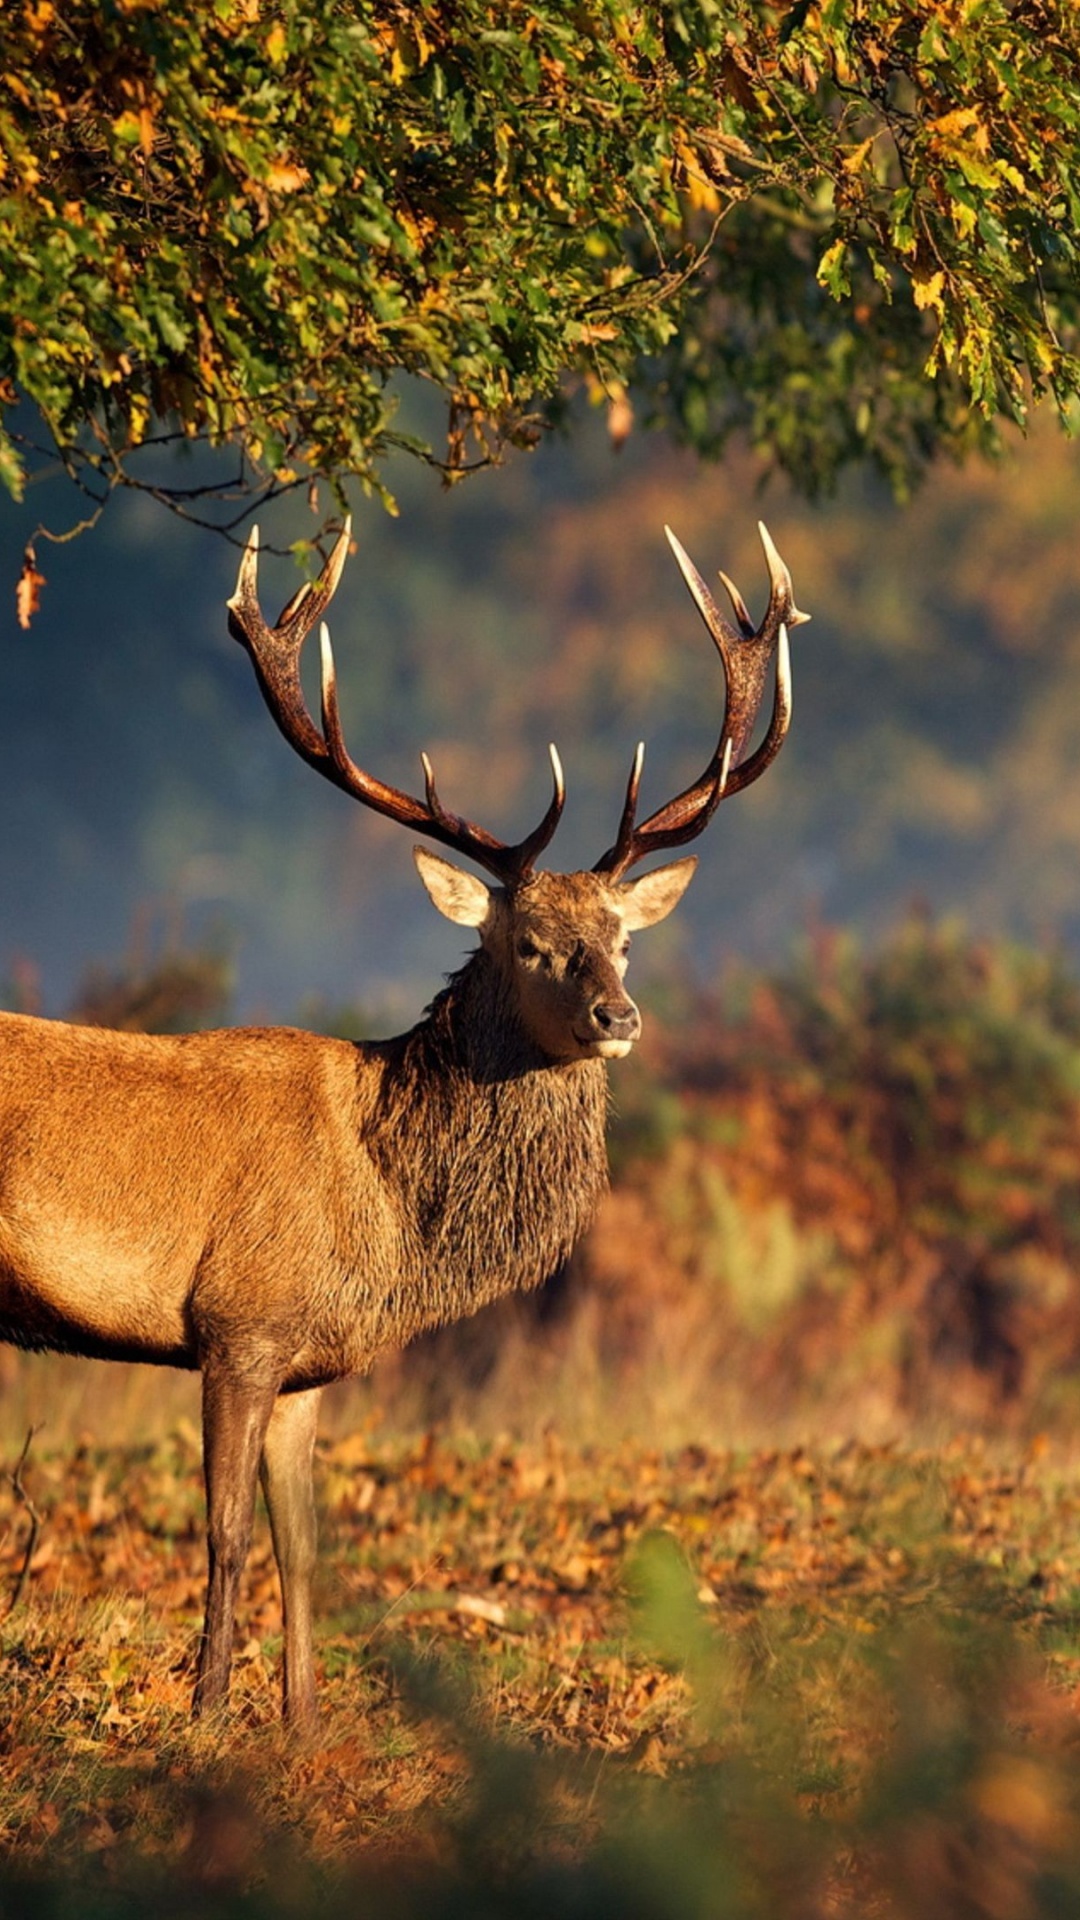 Brown Deer Standing on Brown Grass Field During Daytime. Wallpaper in 1080x1920 Resolution